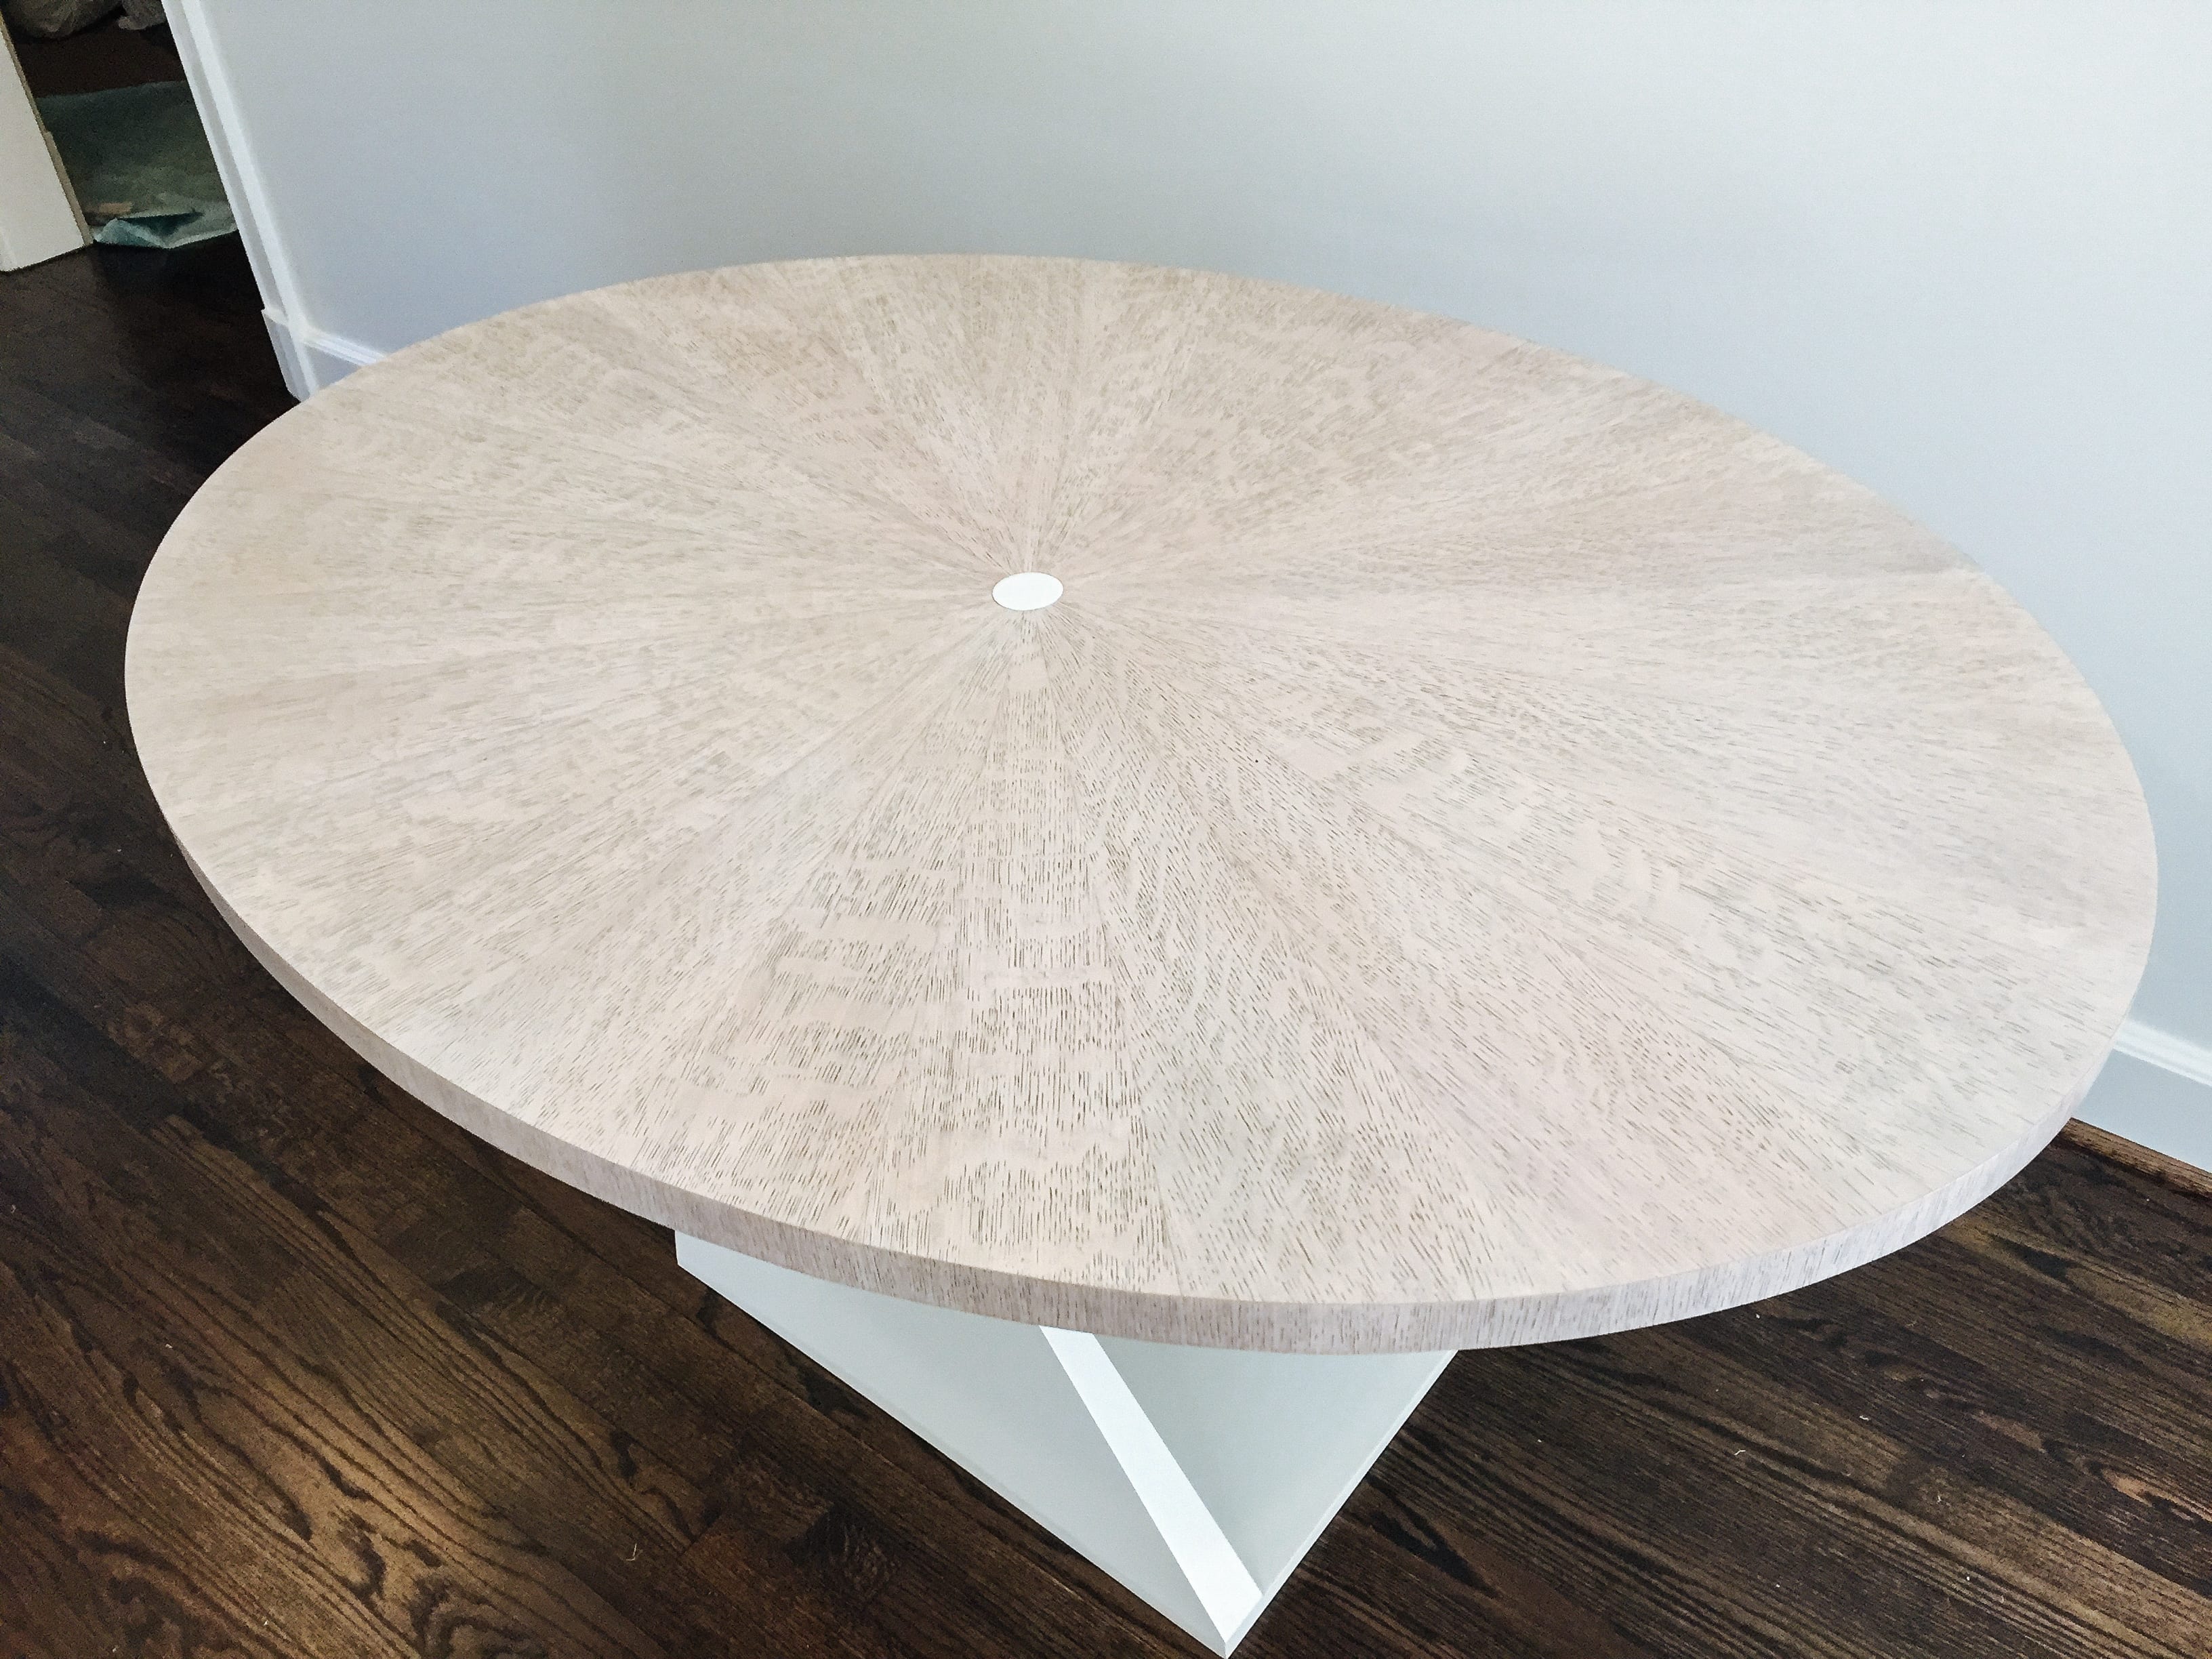 Bleached white oak sunburst breakfast table